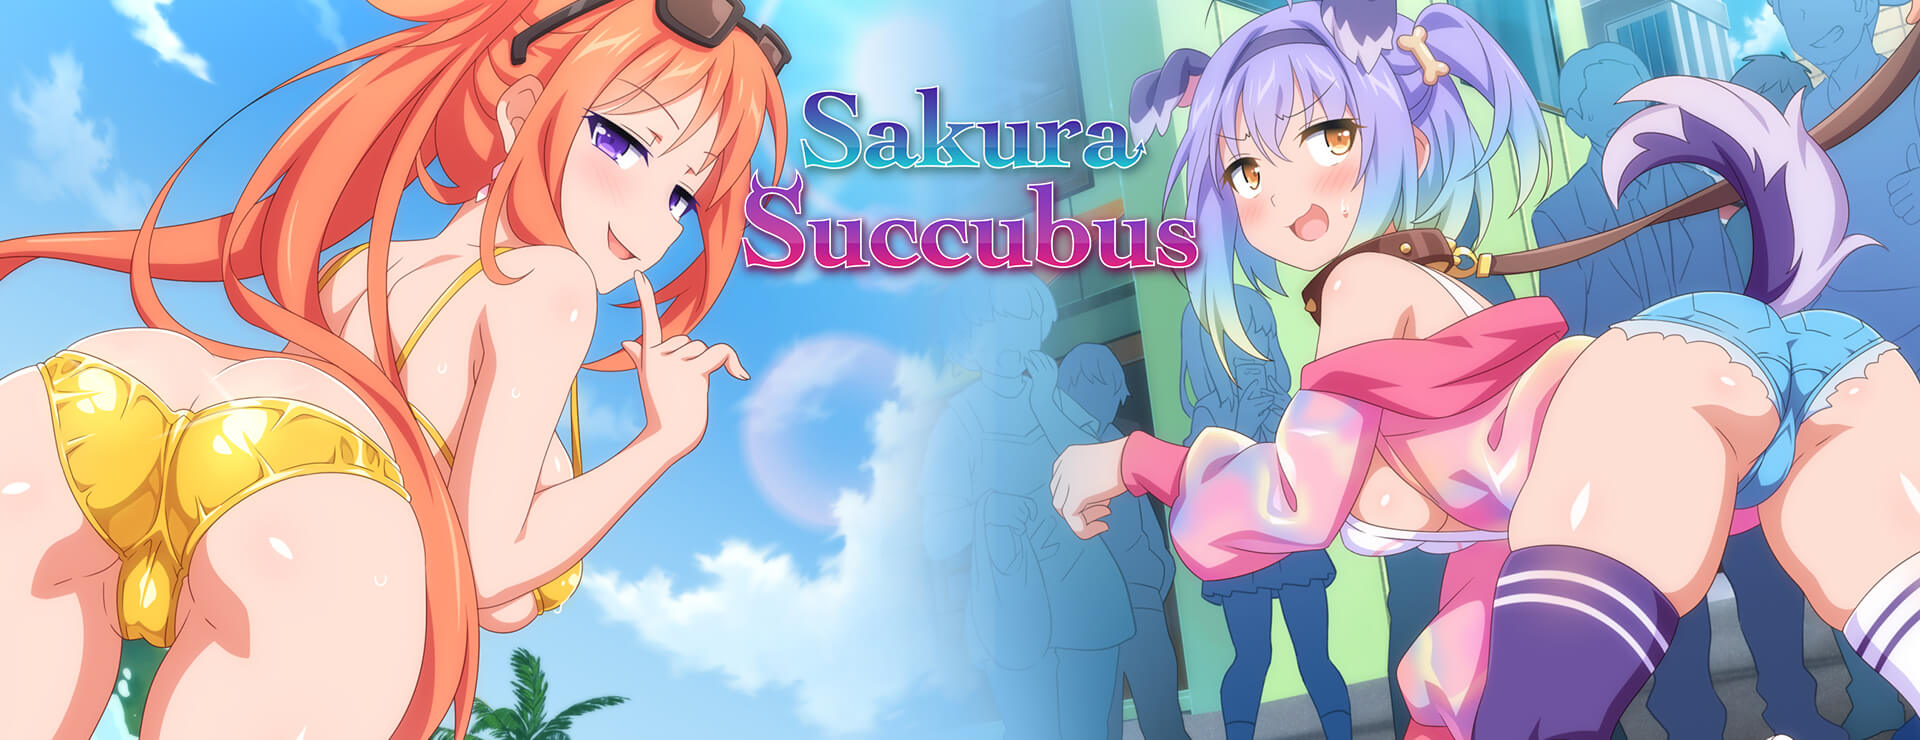 Sakura Succubus thumbnail